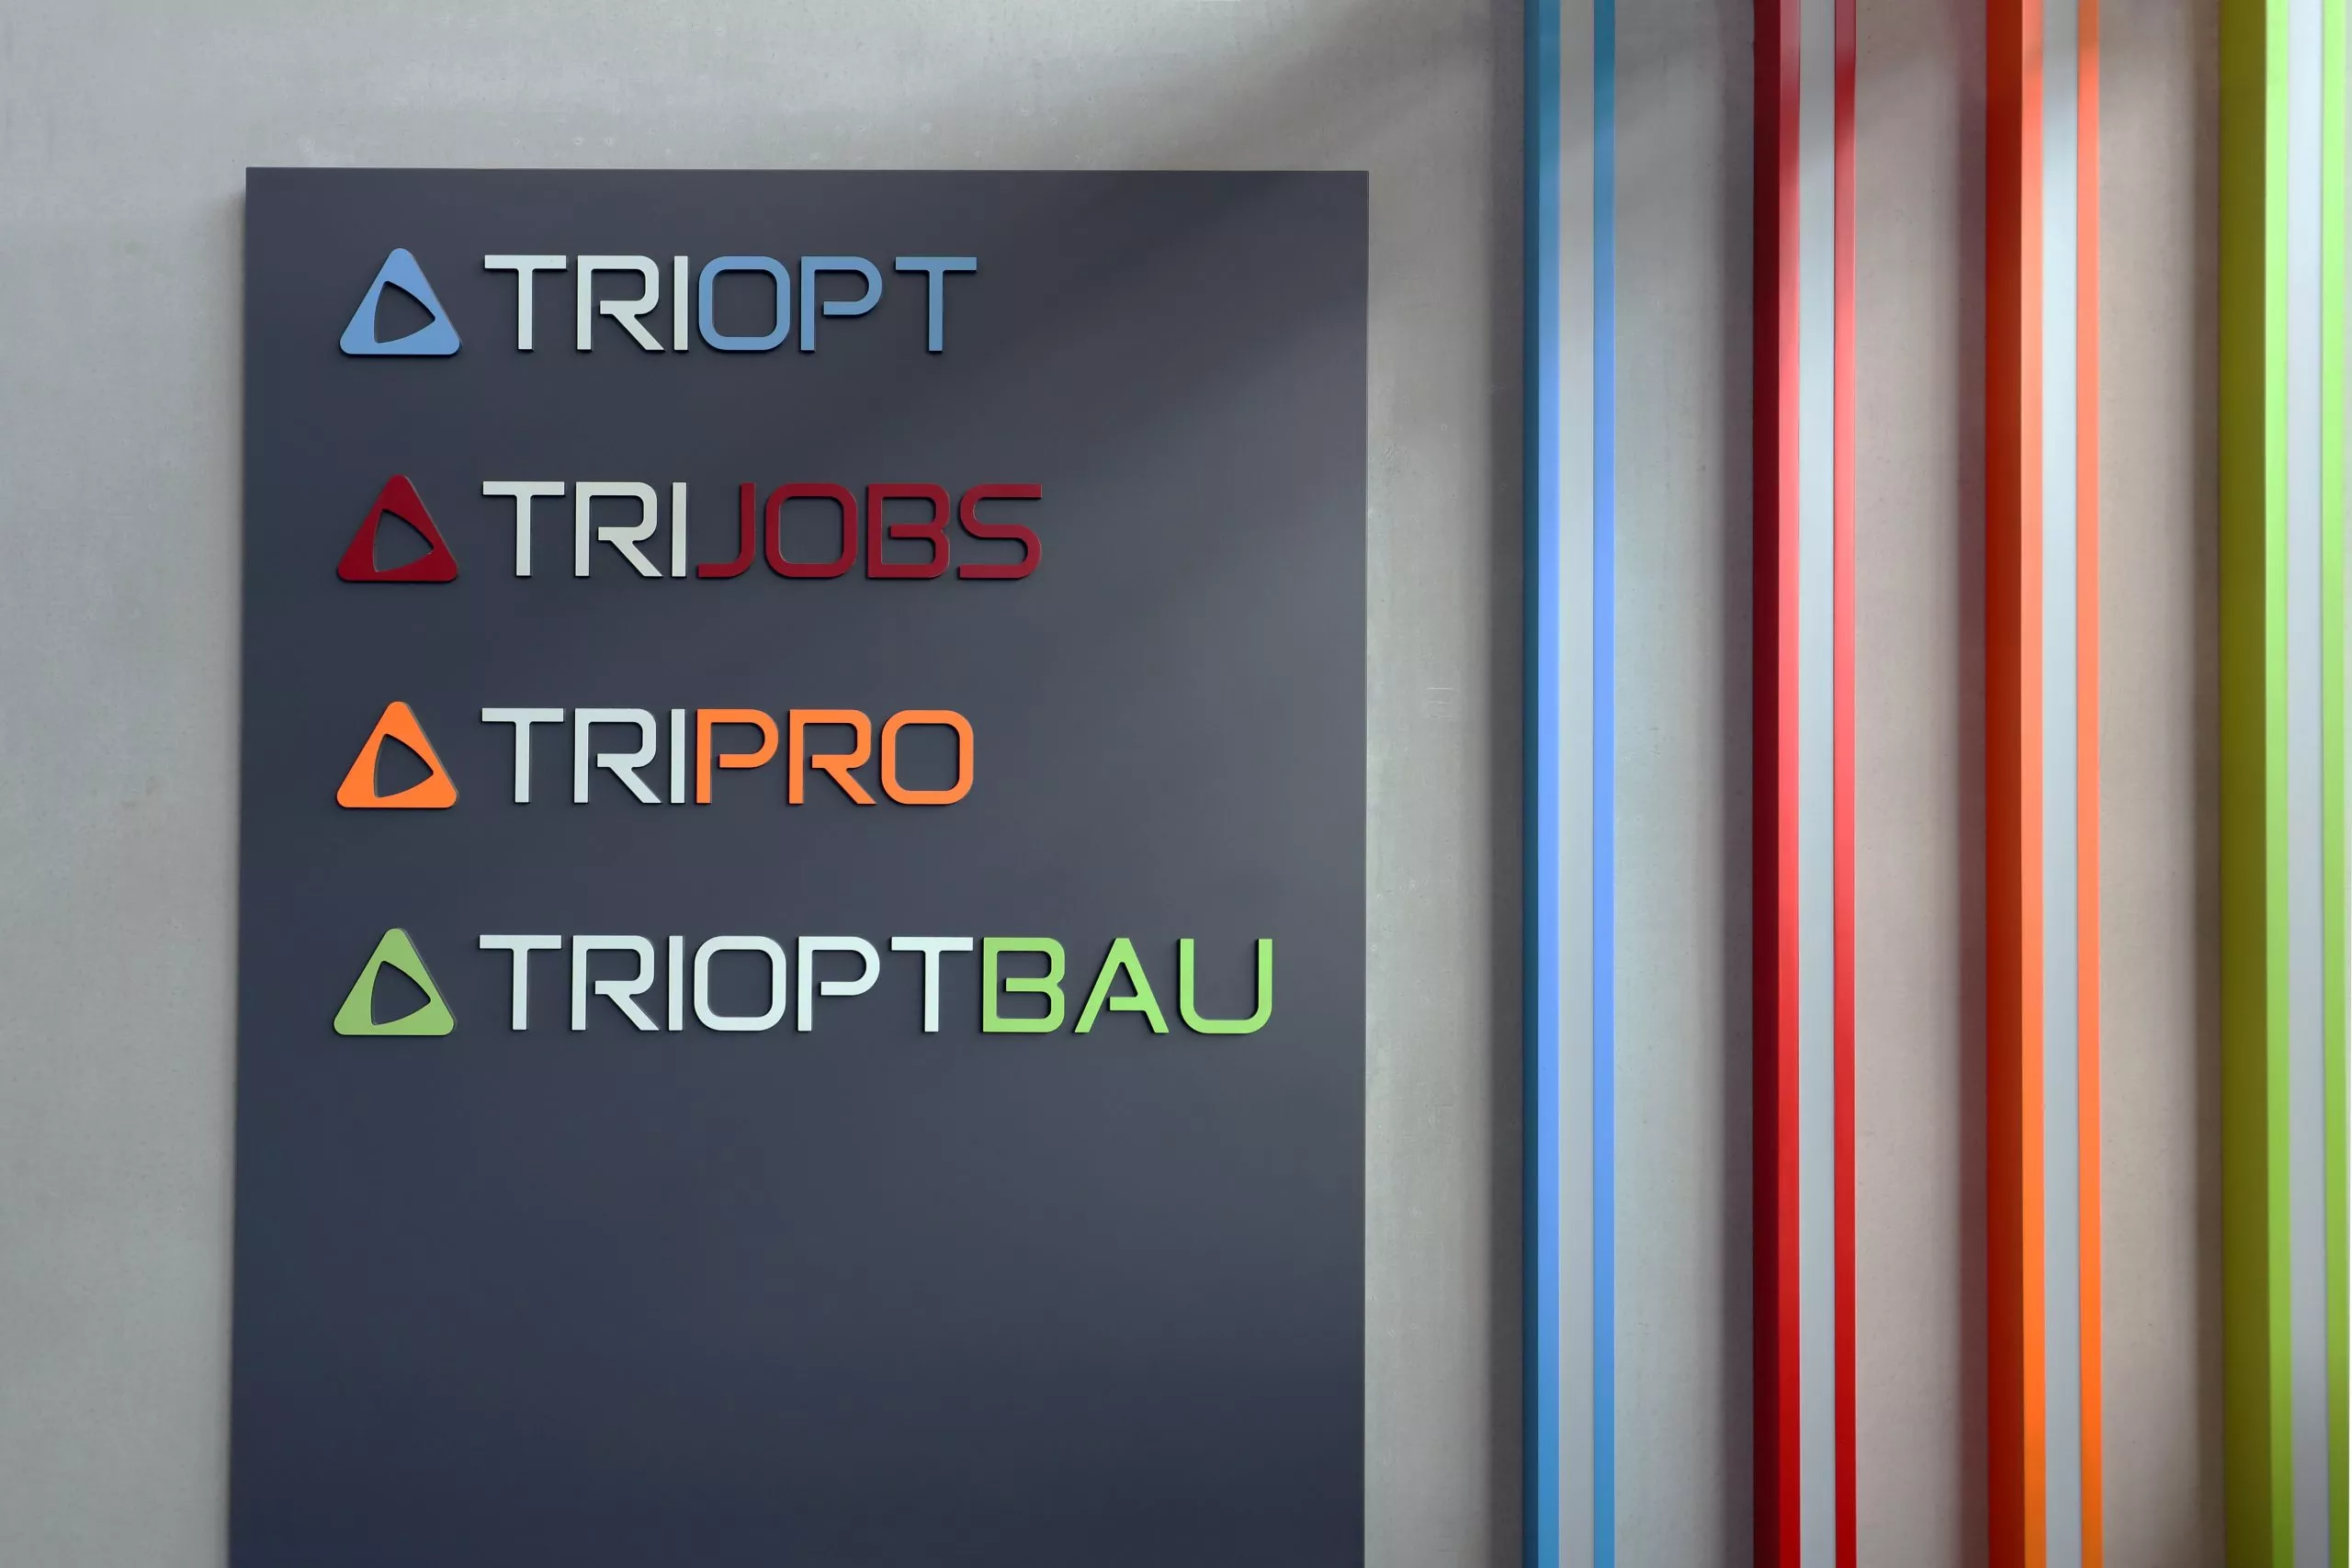 Triopt Group Trijobs Tripro Trioptbau Unternehmen